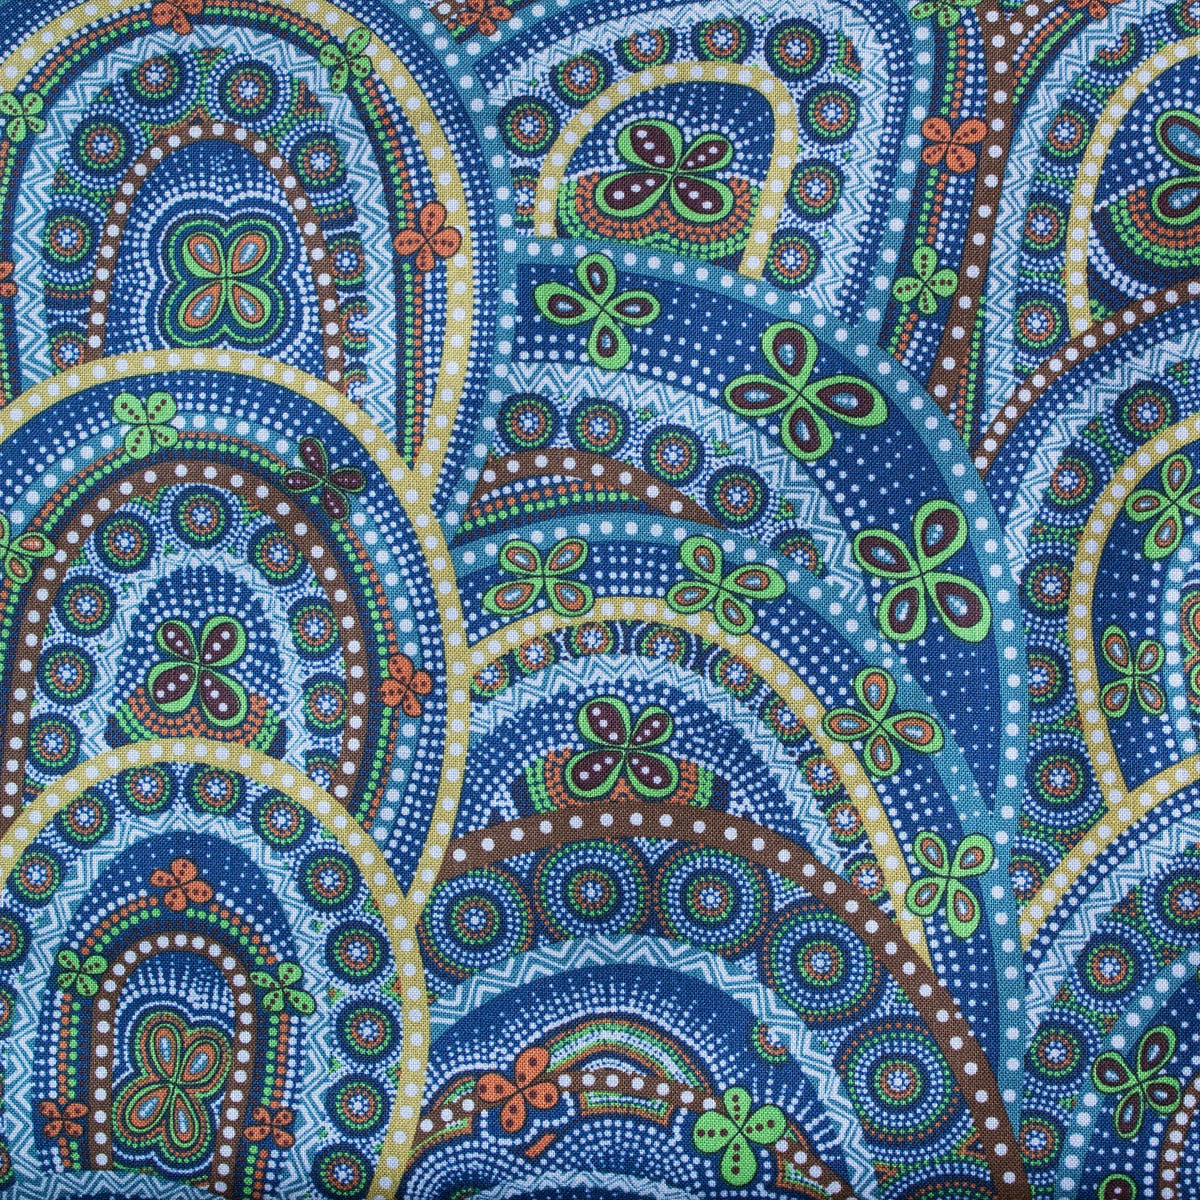 REBIRTH OF BUTTERFLY BLUE by Aboriginal Artist HEATHER KENNEDY